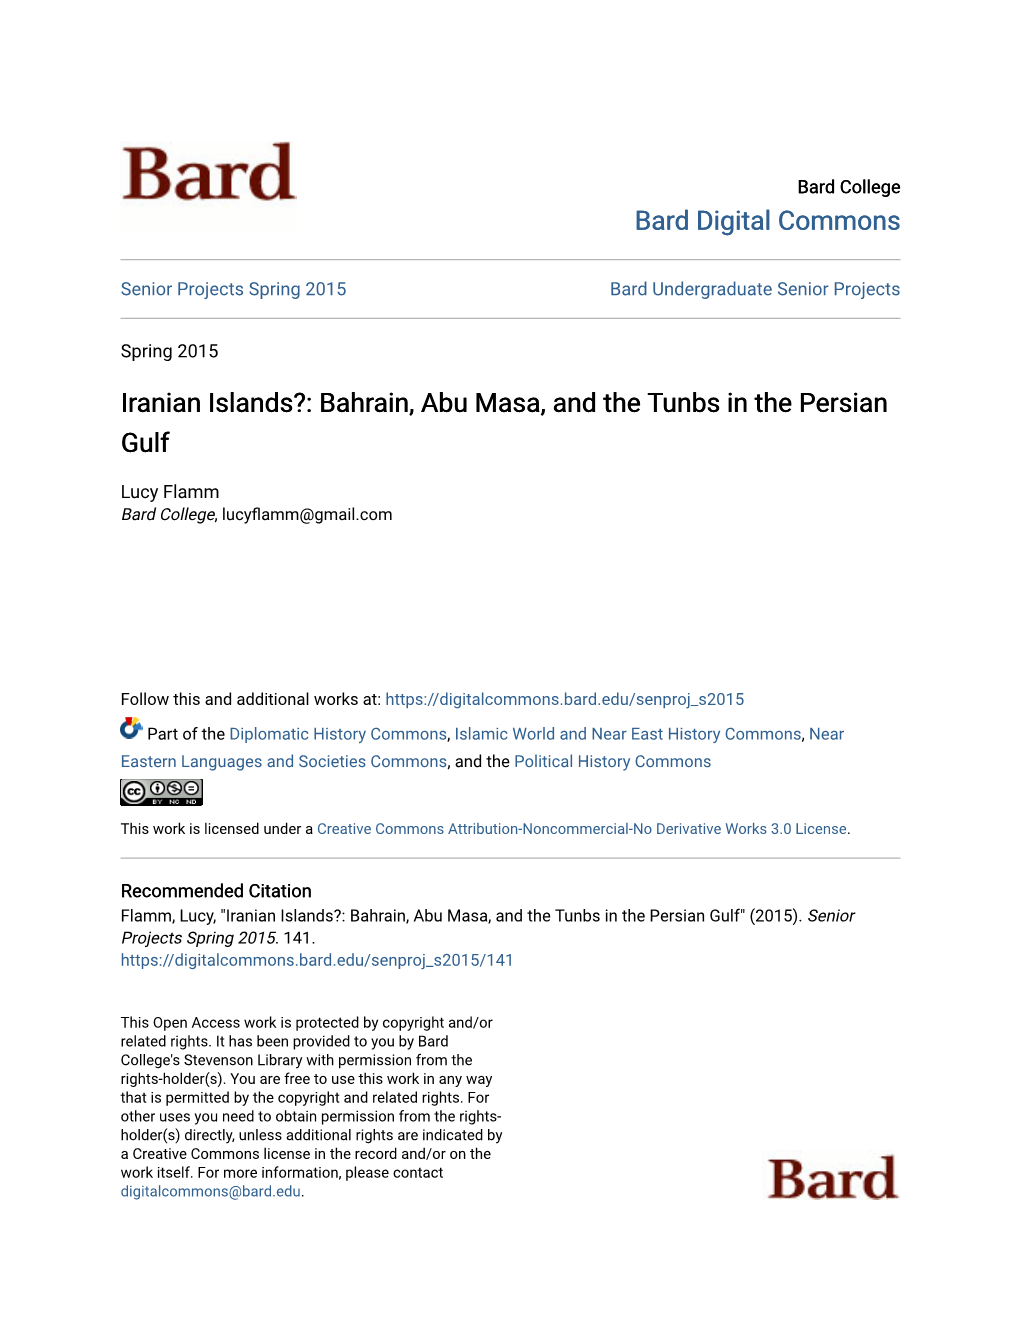 Iranian Islands?: Bahrain, Abu Masa, and the Tunbs in the Persian Gulf